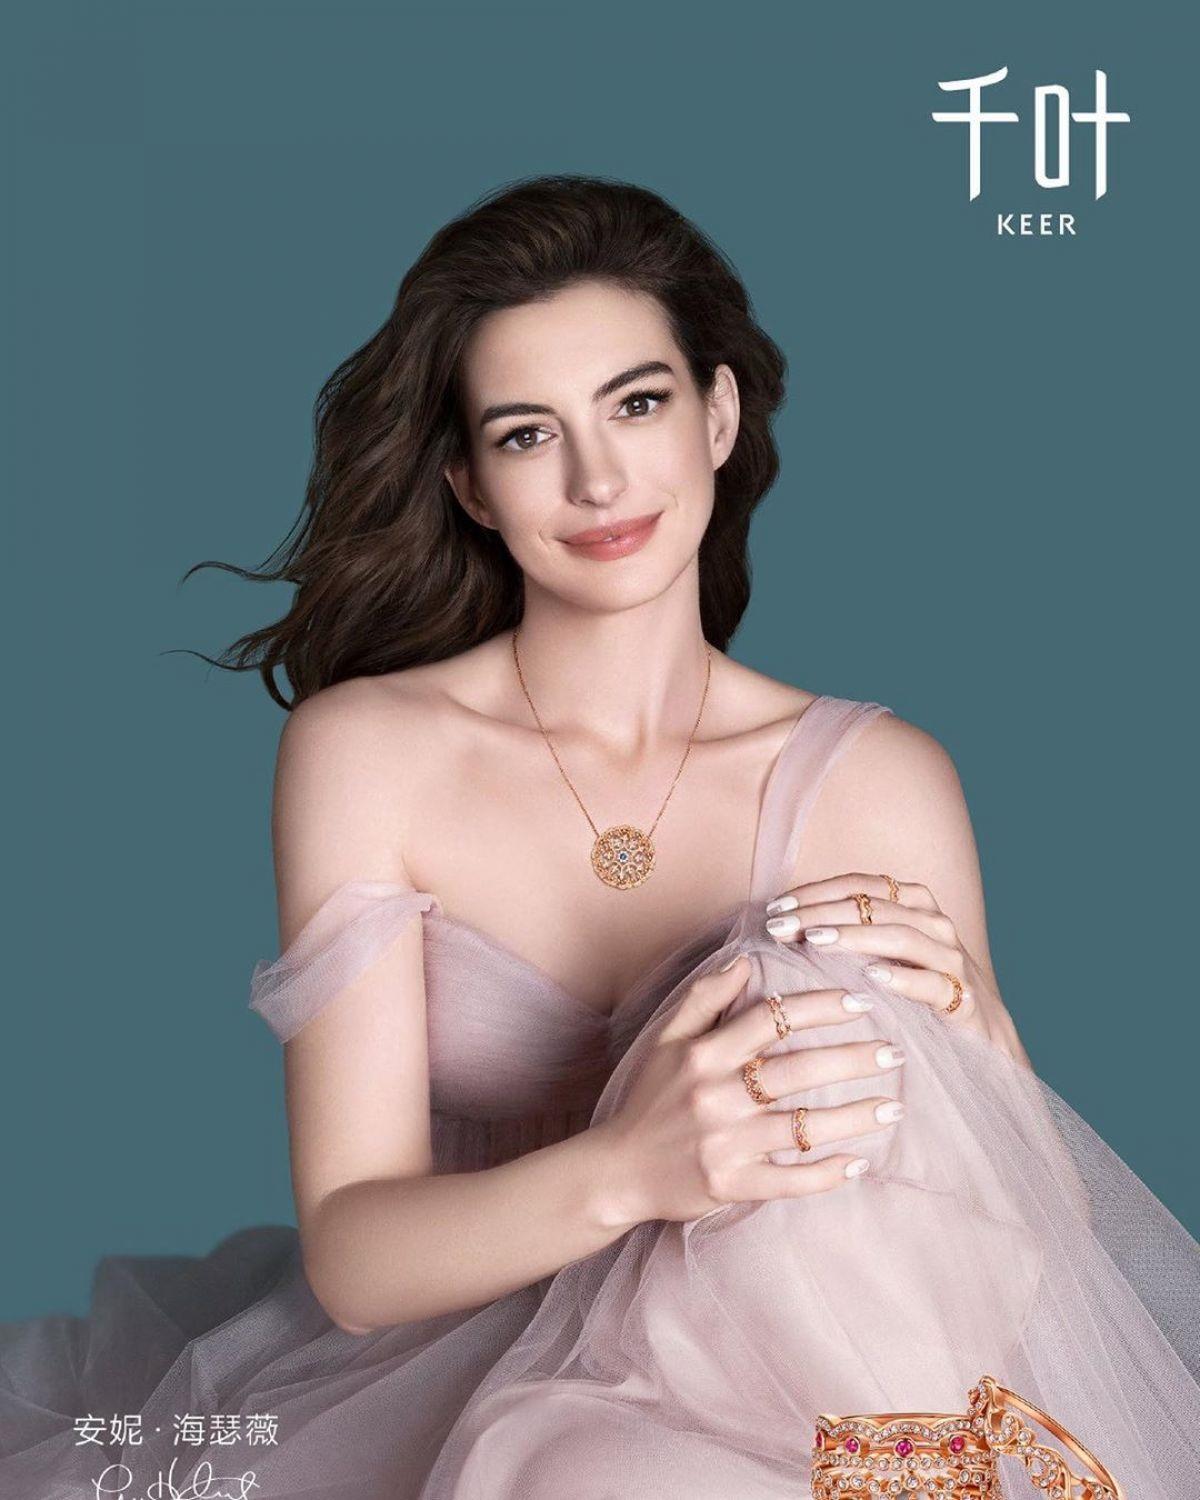 Anne Hathaway Keer 2019 Campaign